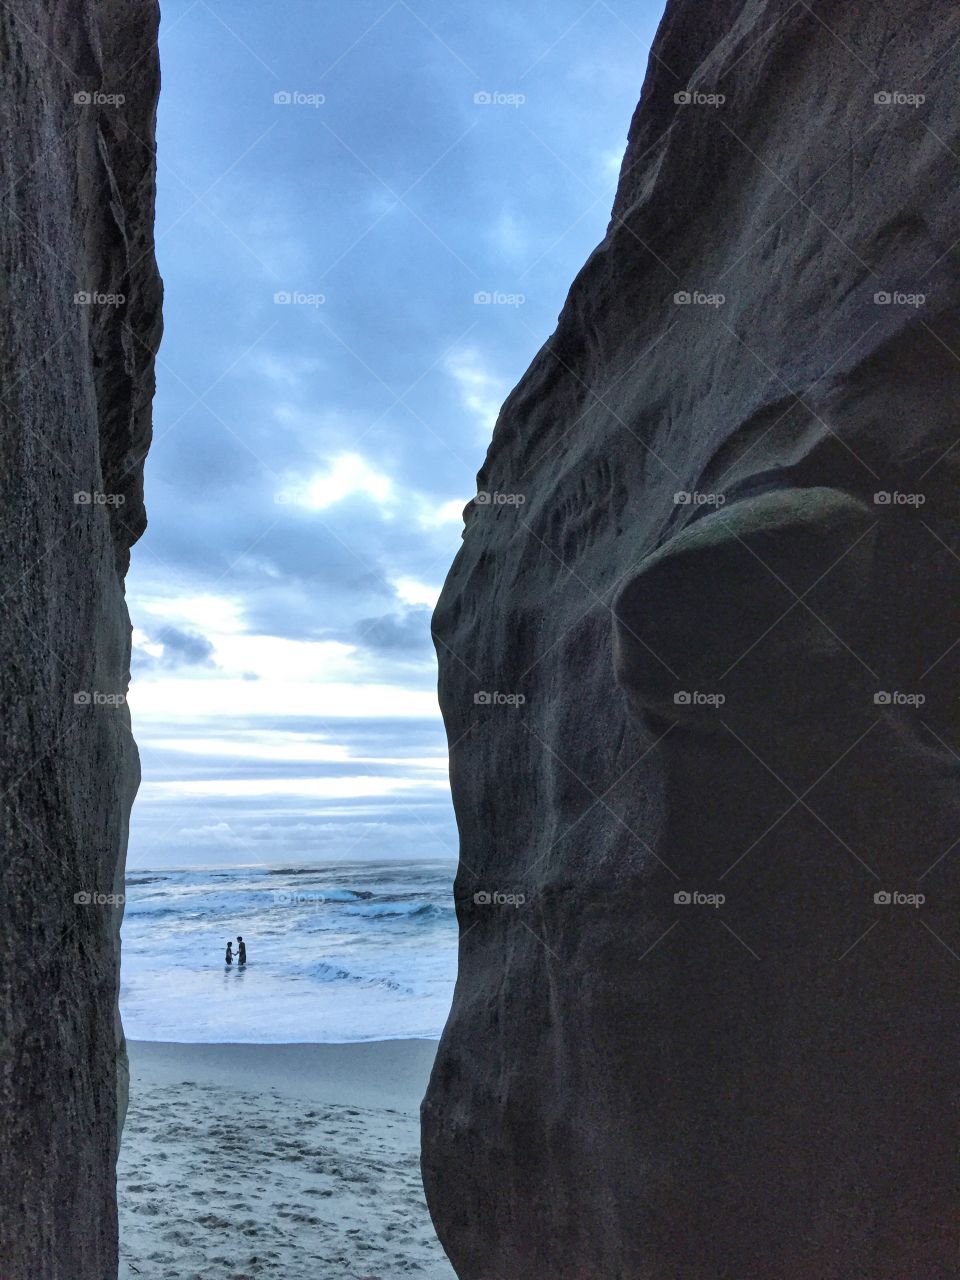 Through the cliff